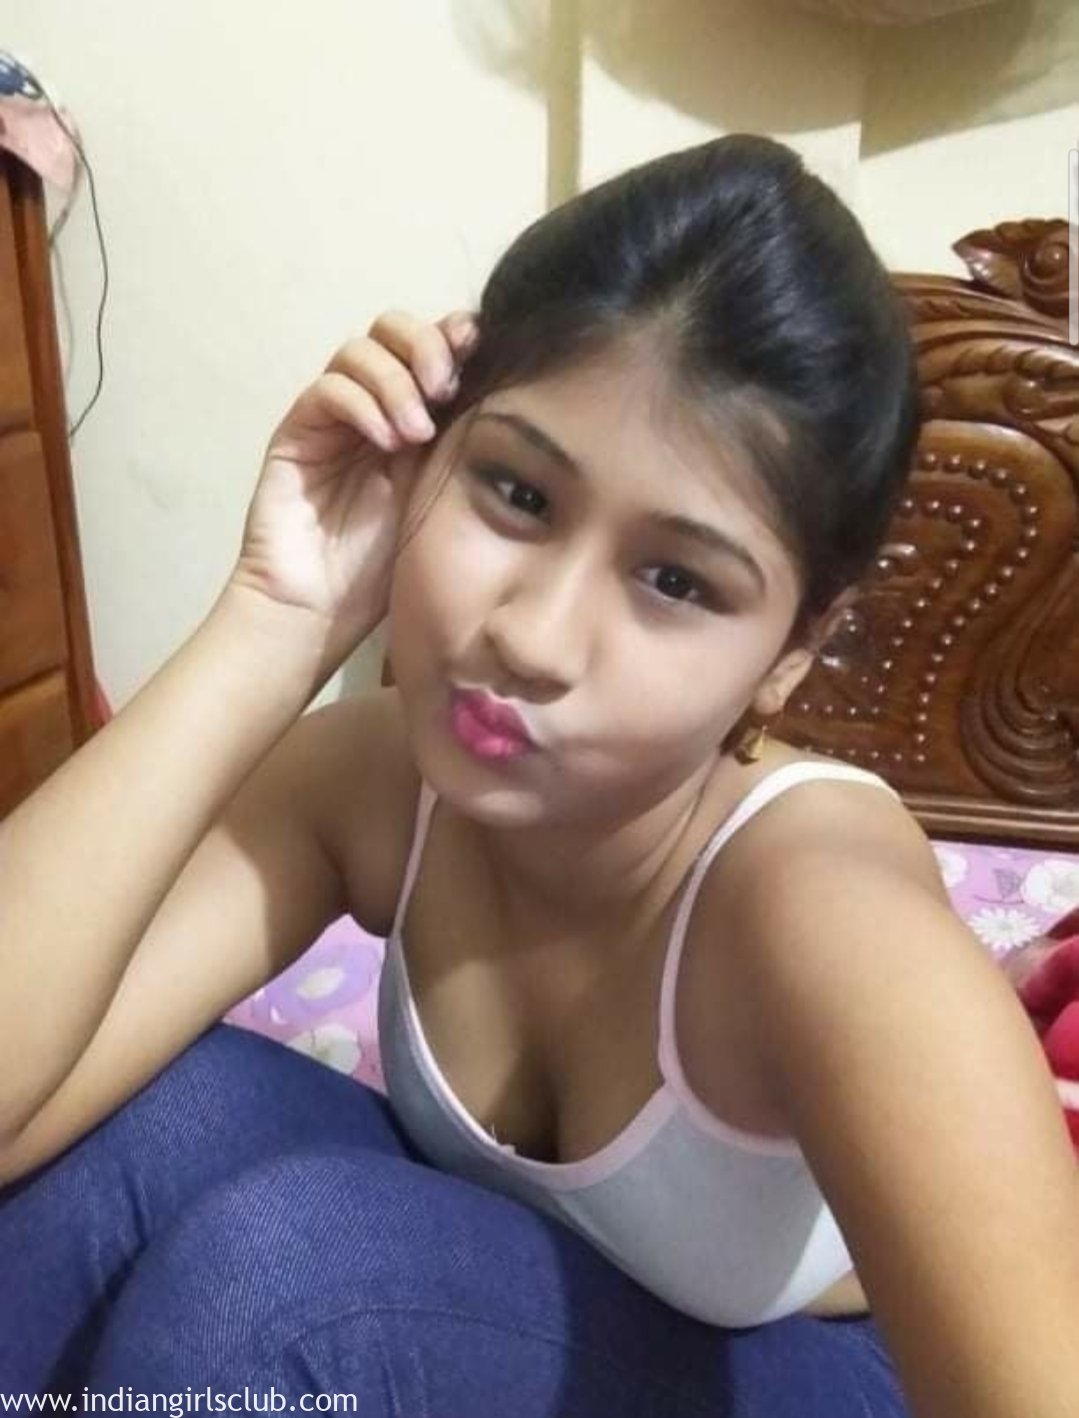 18 Years Old Juicy Indian School Girl Hot Sex - Indian Girls Club